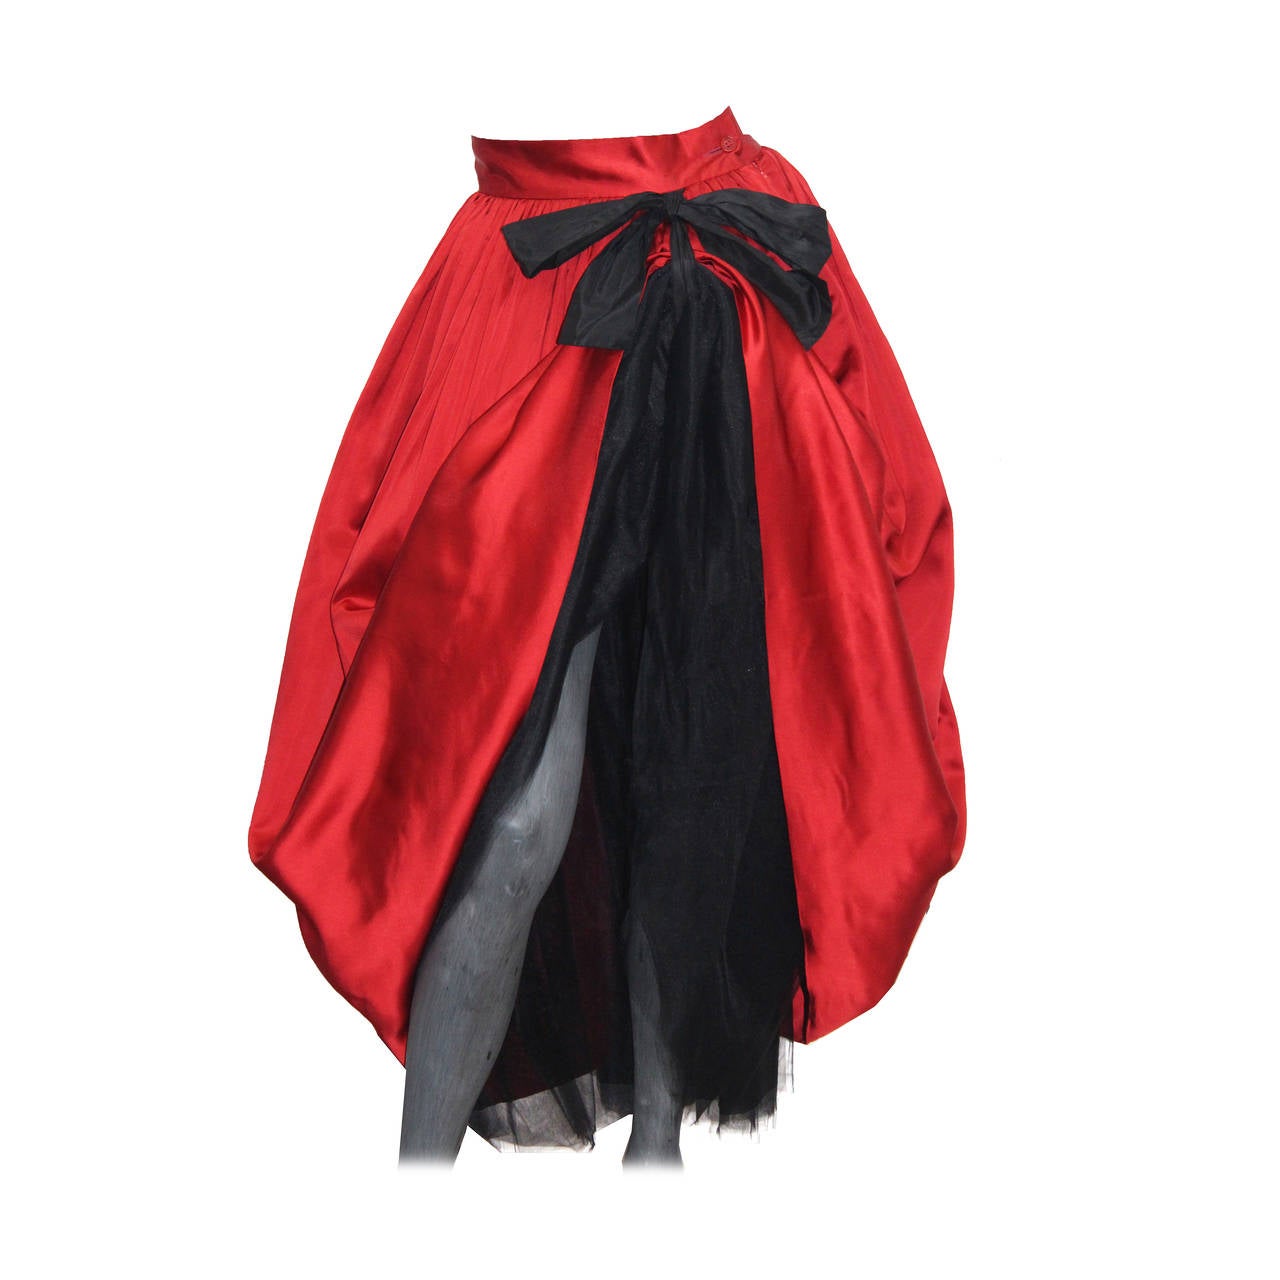 The Iconic Dolce & Gabbana Christy Turlington Red Silk Skirt c. 1992